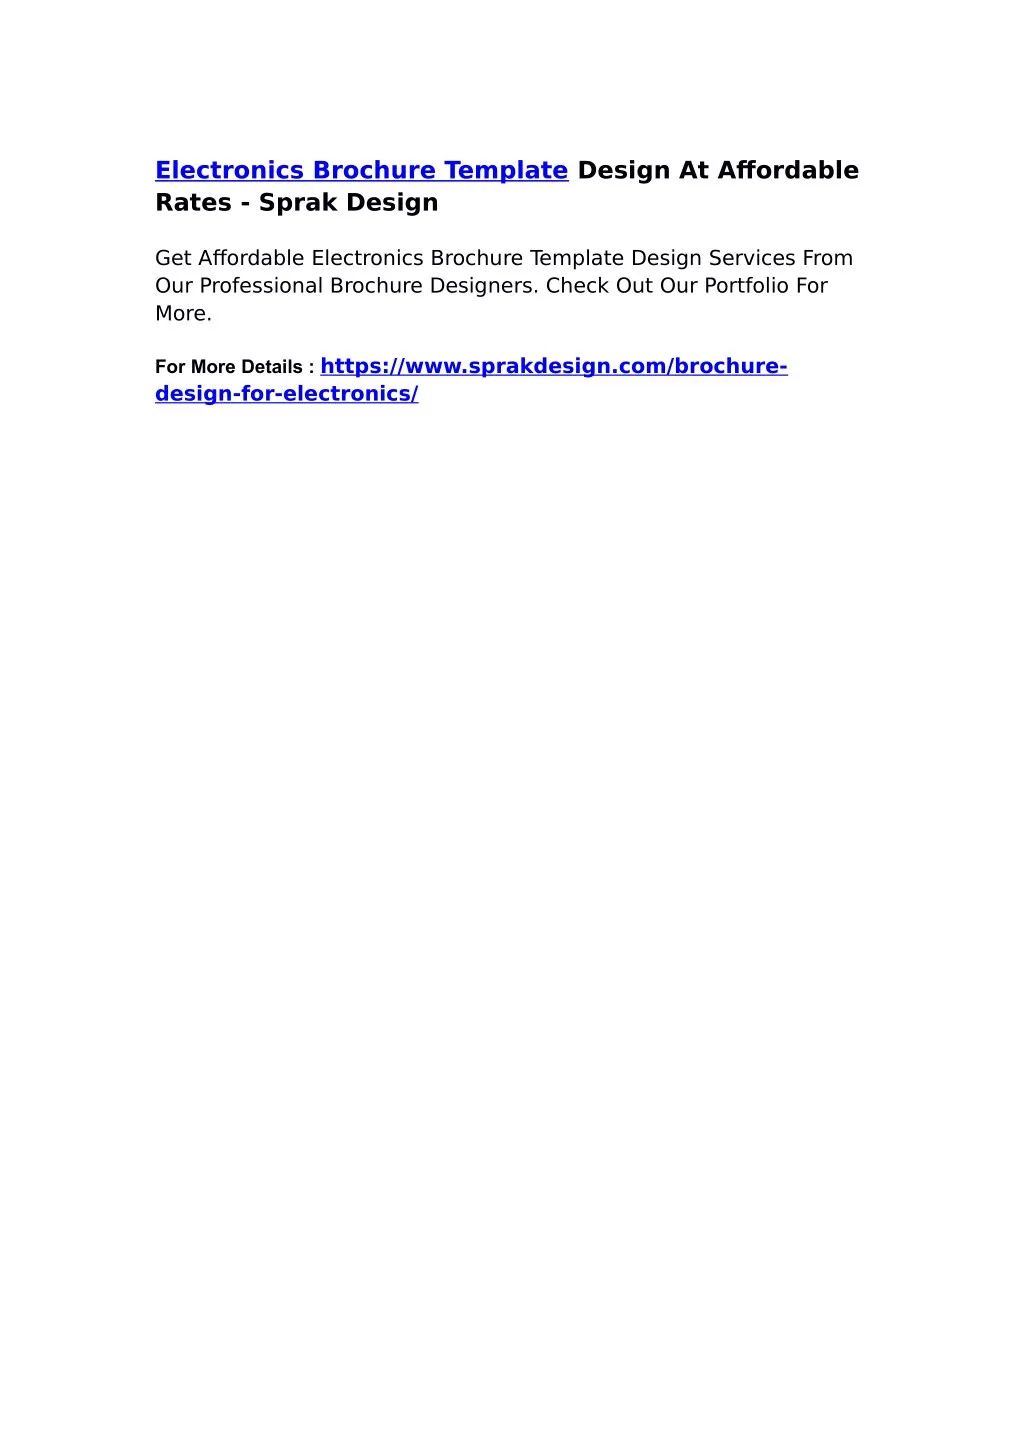 electronics brochure template design n.